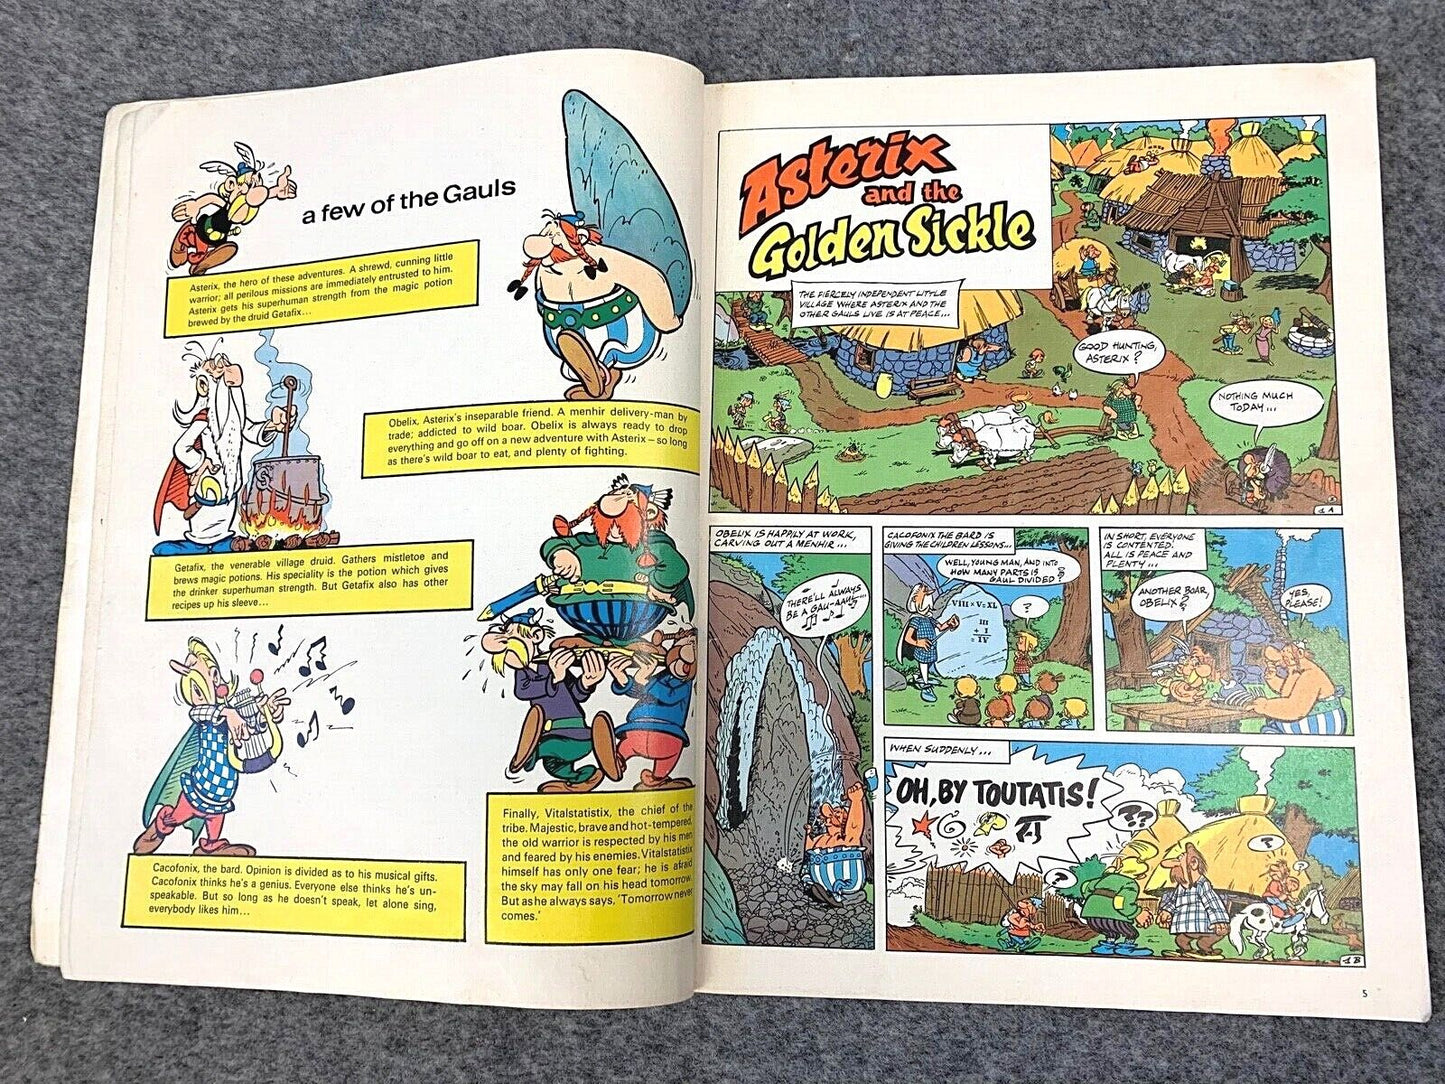 Asterix & the Golden Sickle - 1970s Hodder/Dargaud UK Edition Paperback Book Uderzo